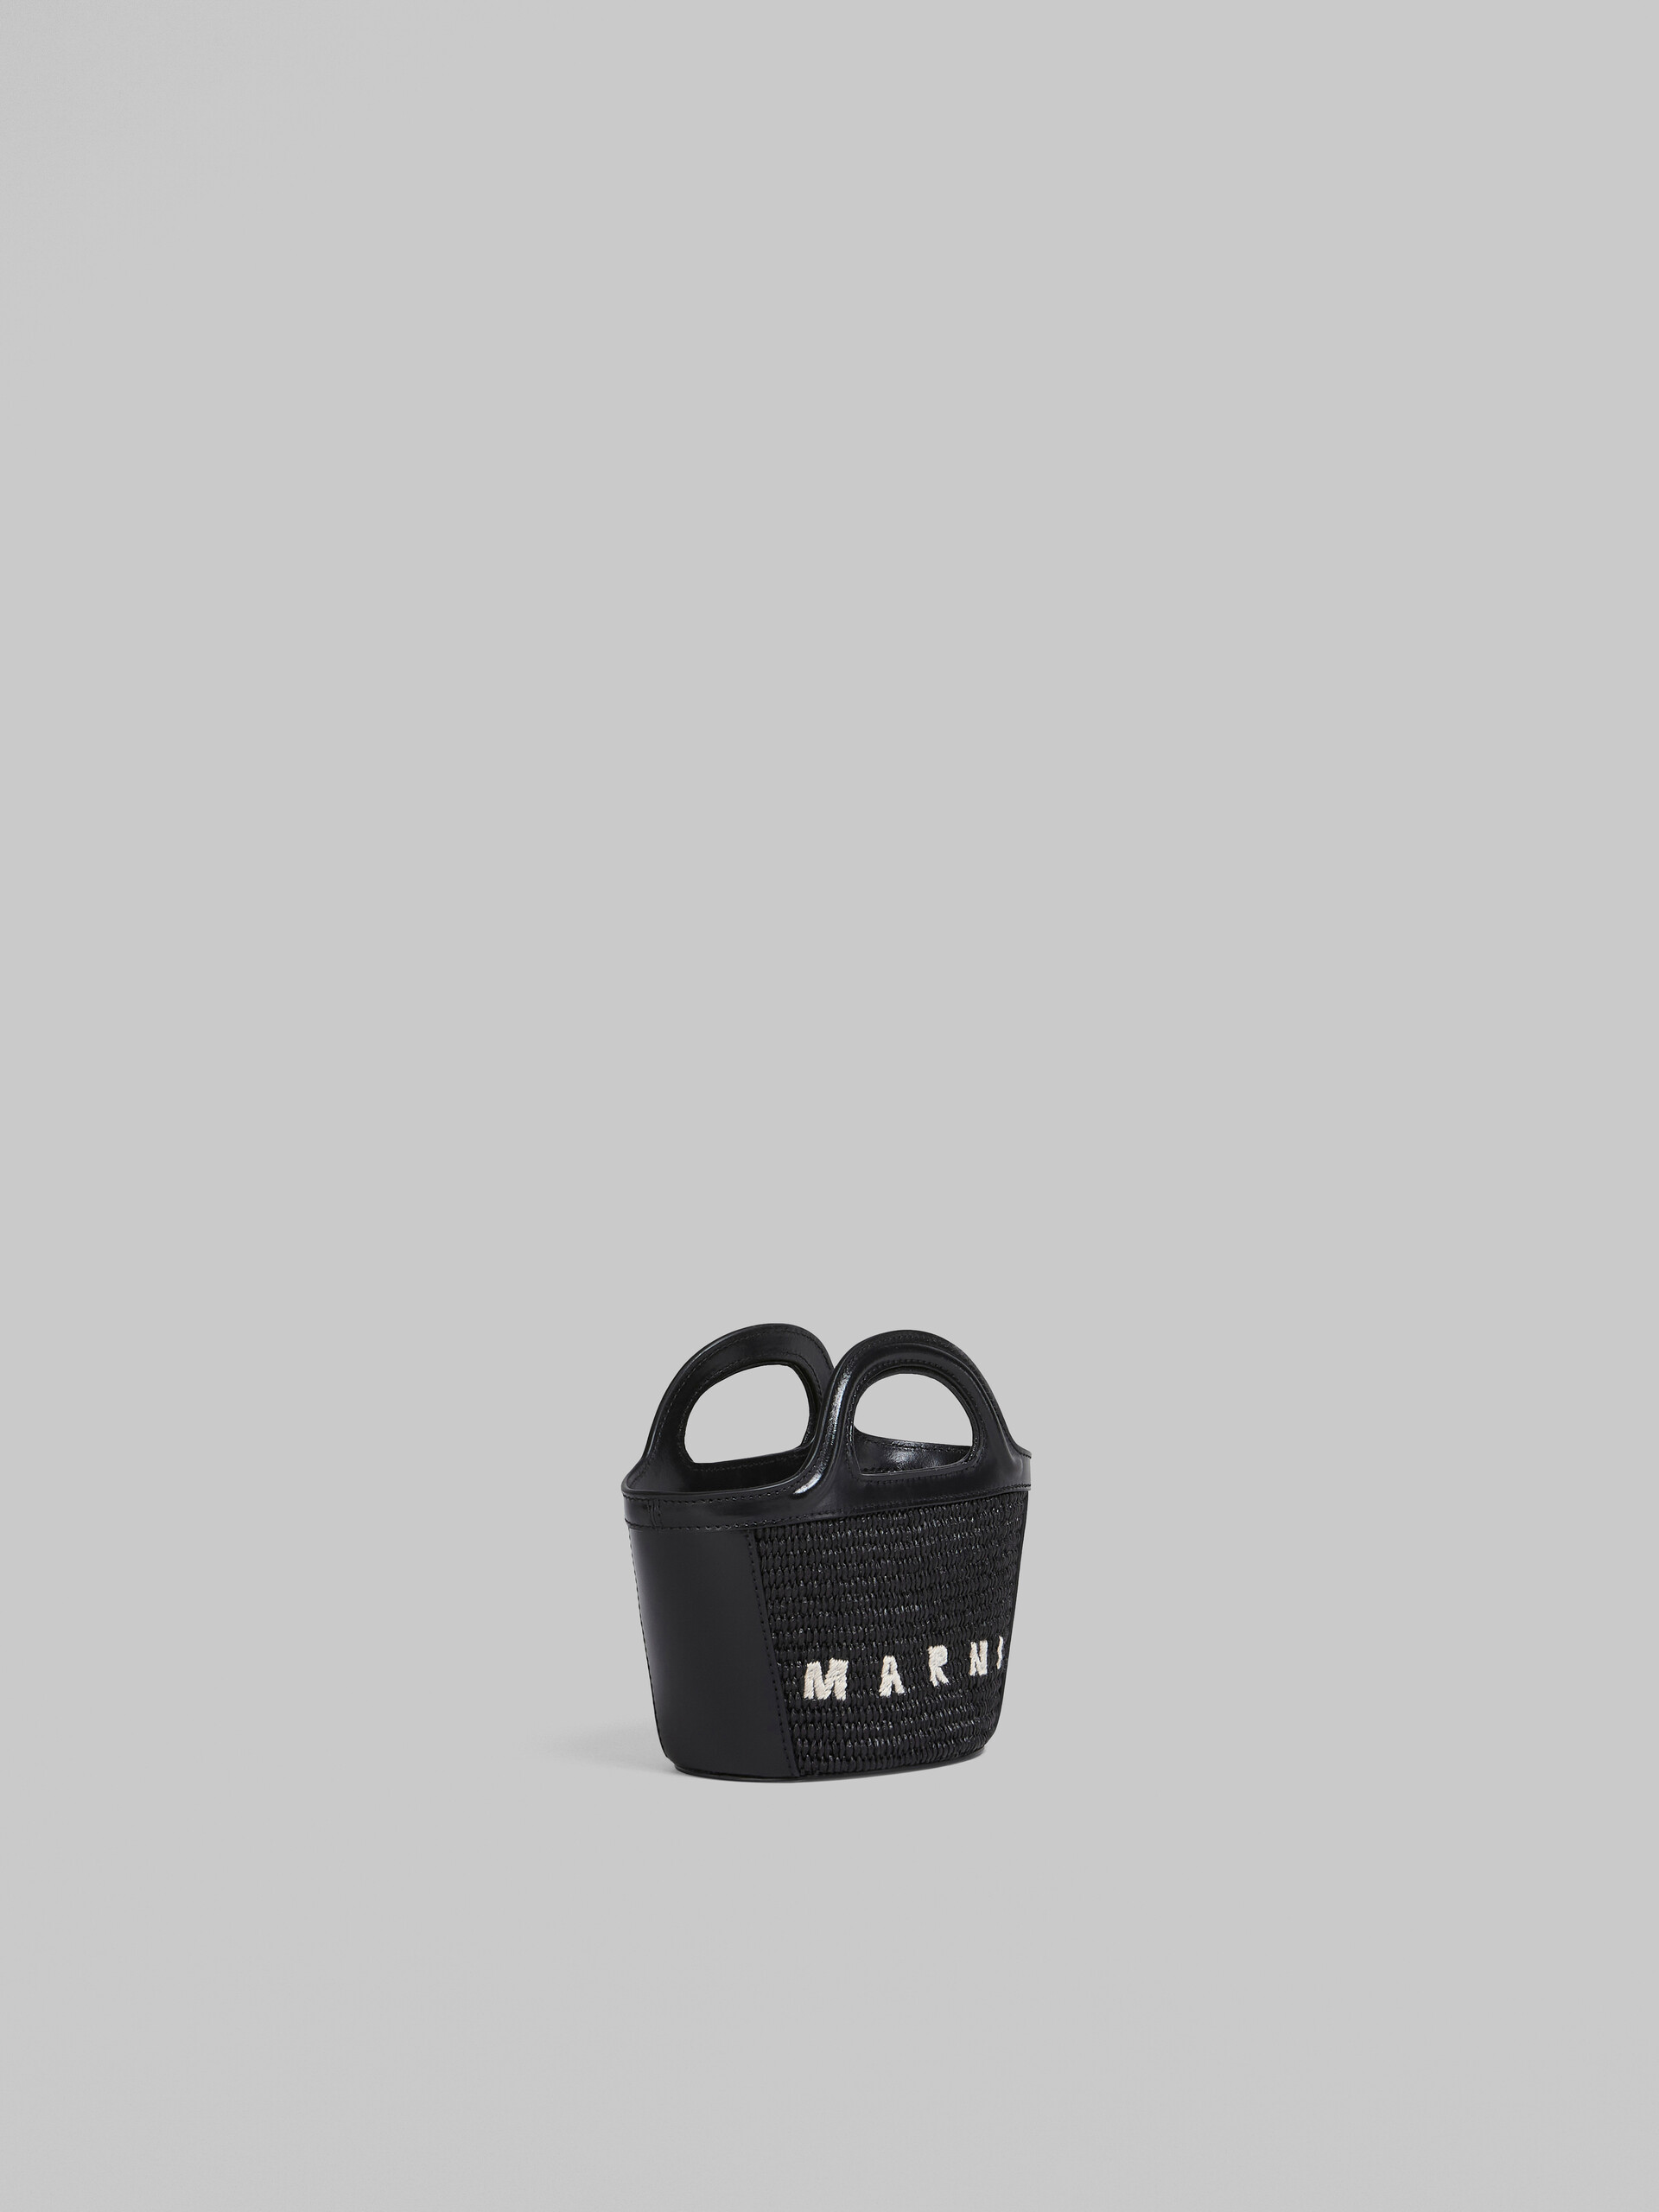 TROPICALIA micro bag in black leather and raffia - Handbag - Image 6